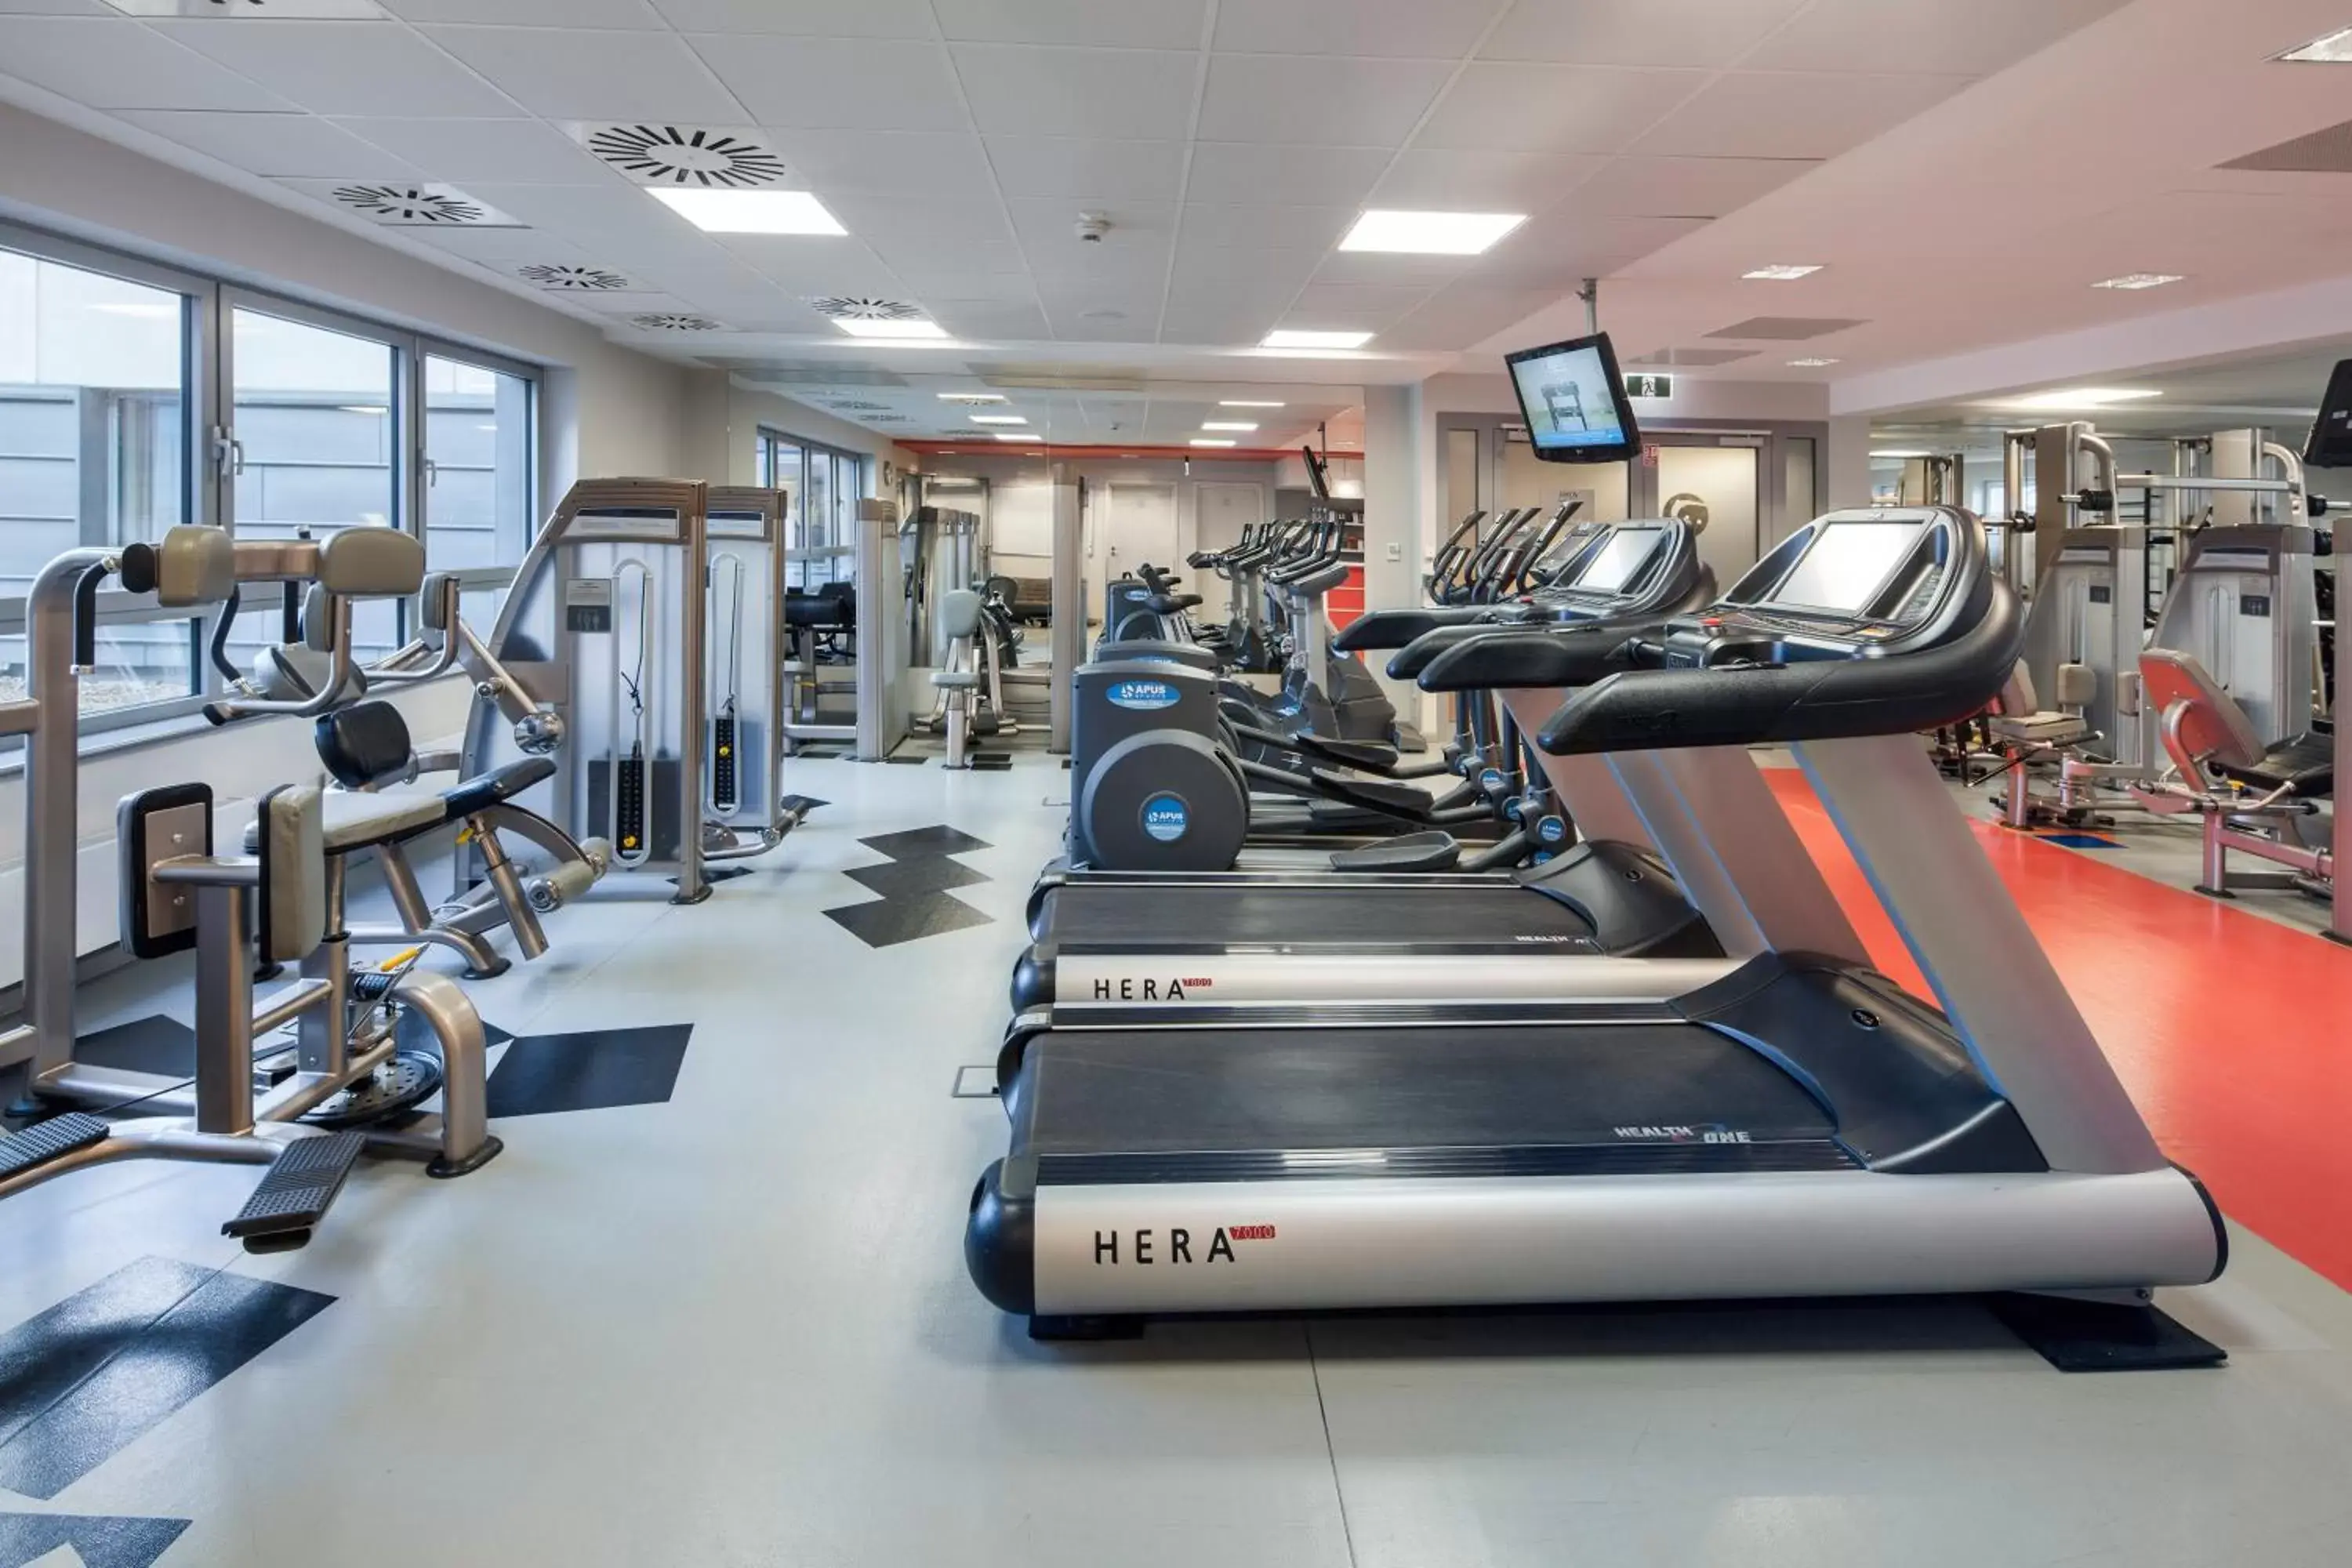 Fitness centre/facilities, Fitness Center/Facilities in Hotel Arkon Park Business & Sport